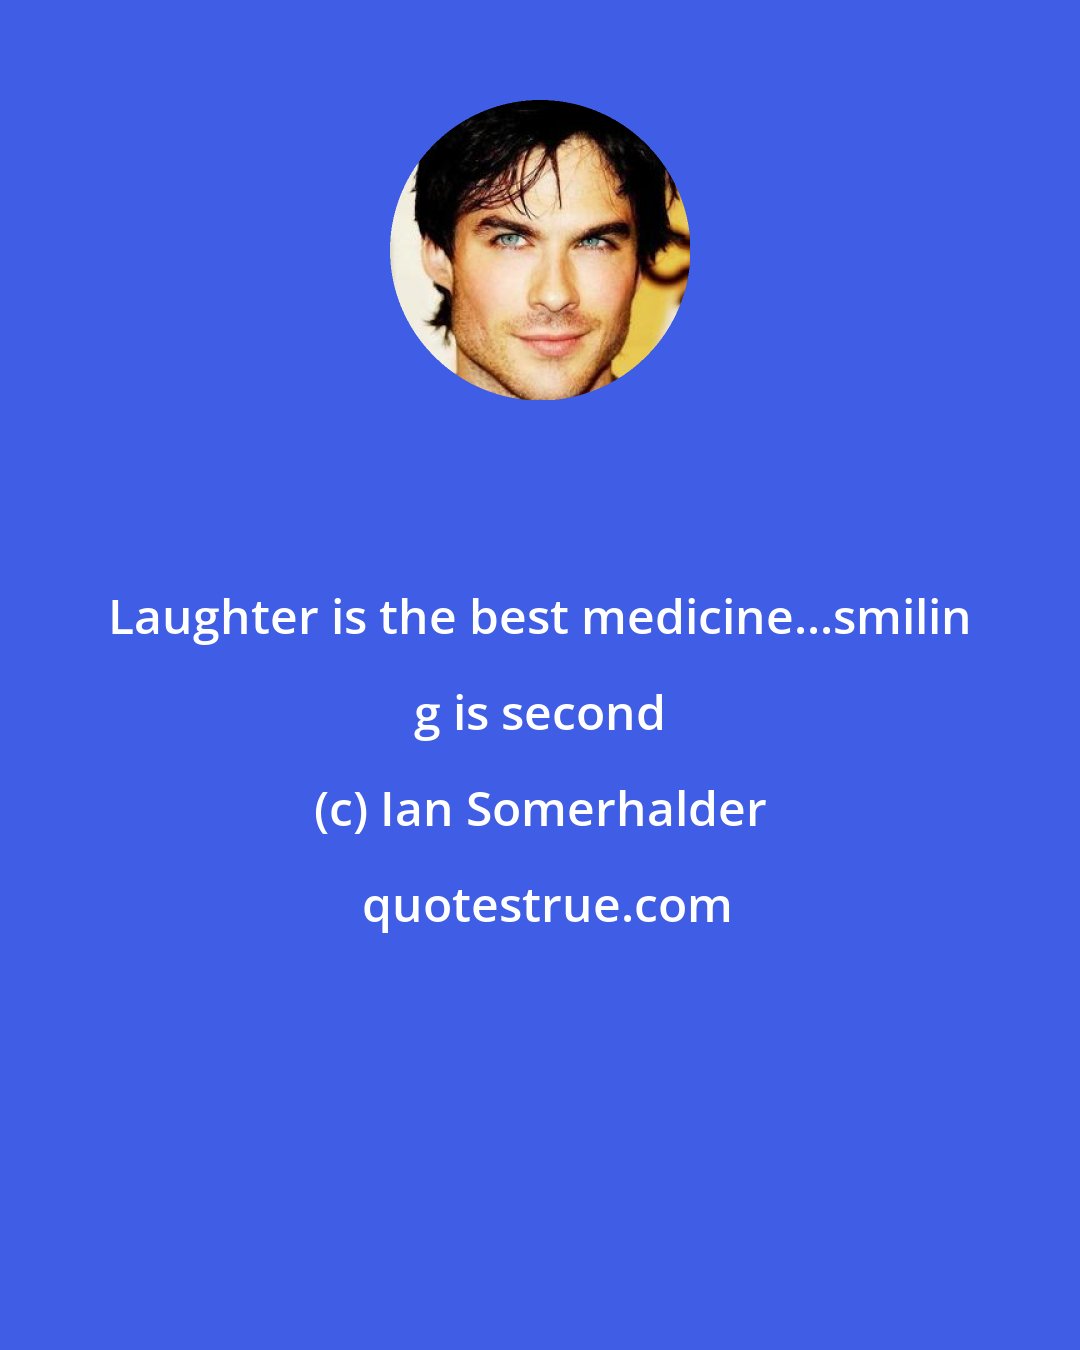 Ian Somerhalder: Laughter is the best medicine...smilin g is second